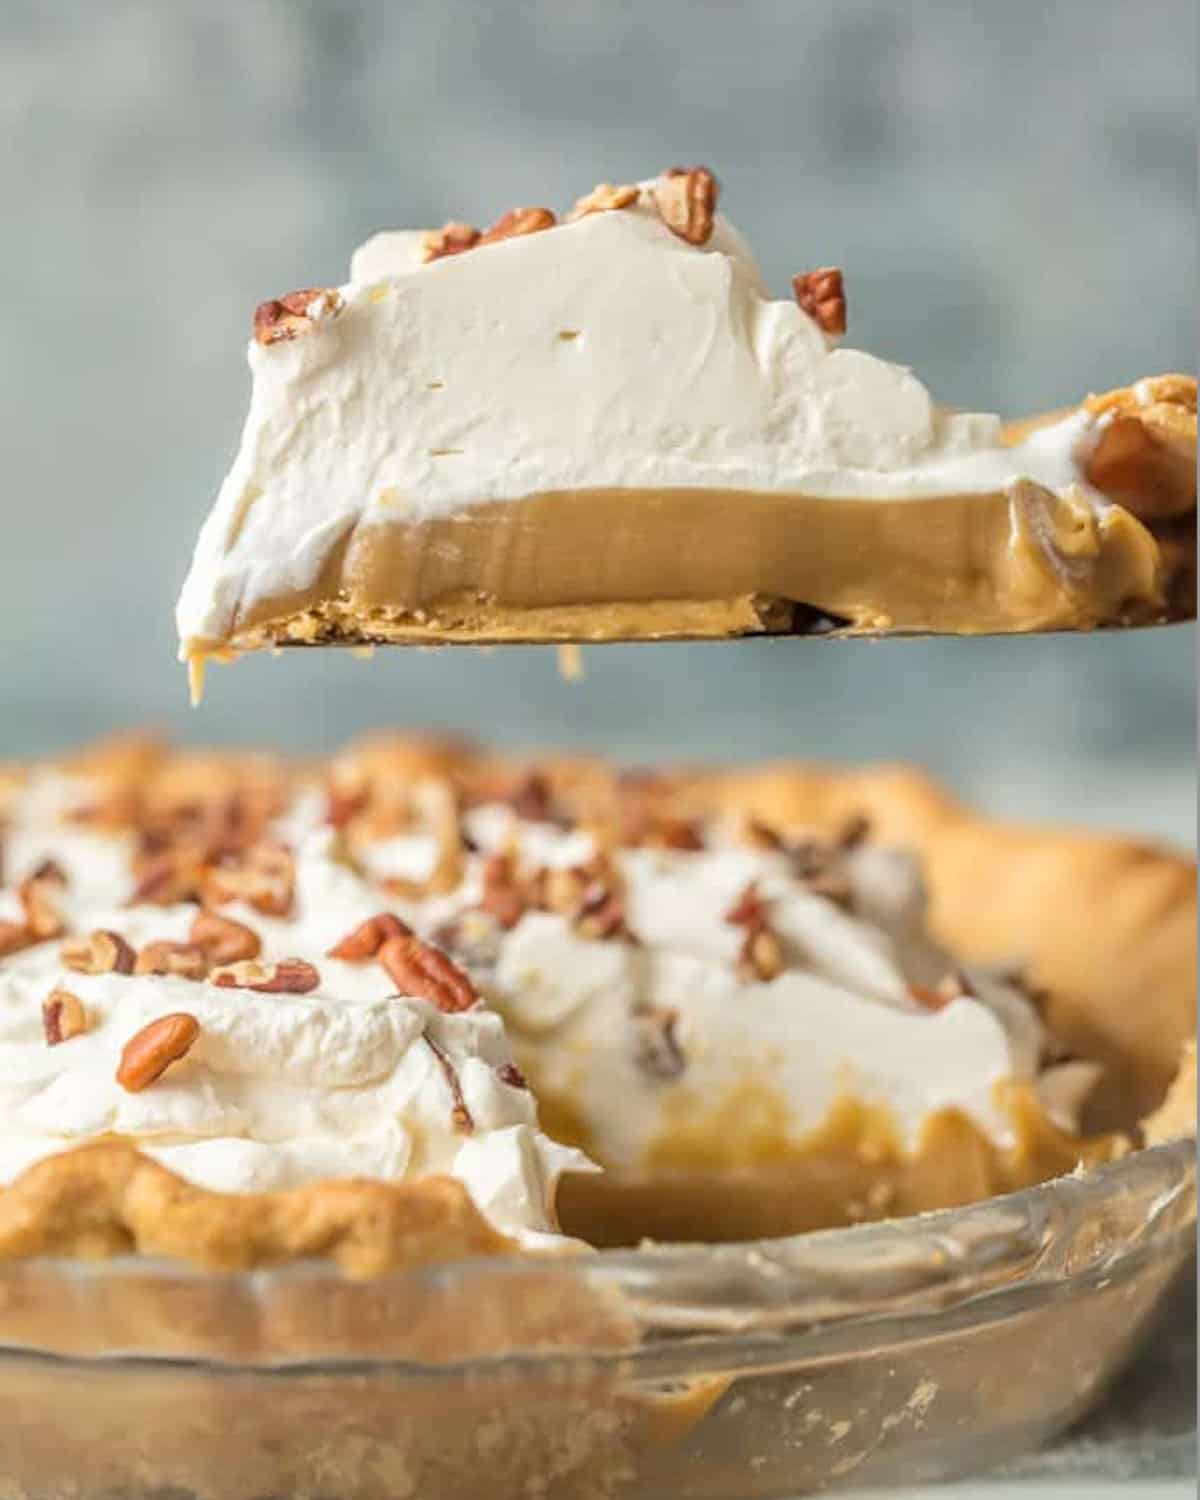 Keywords: peanut butter pie, whipped cream.